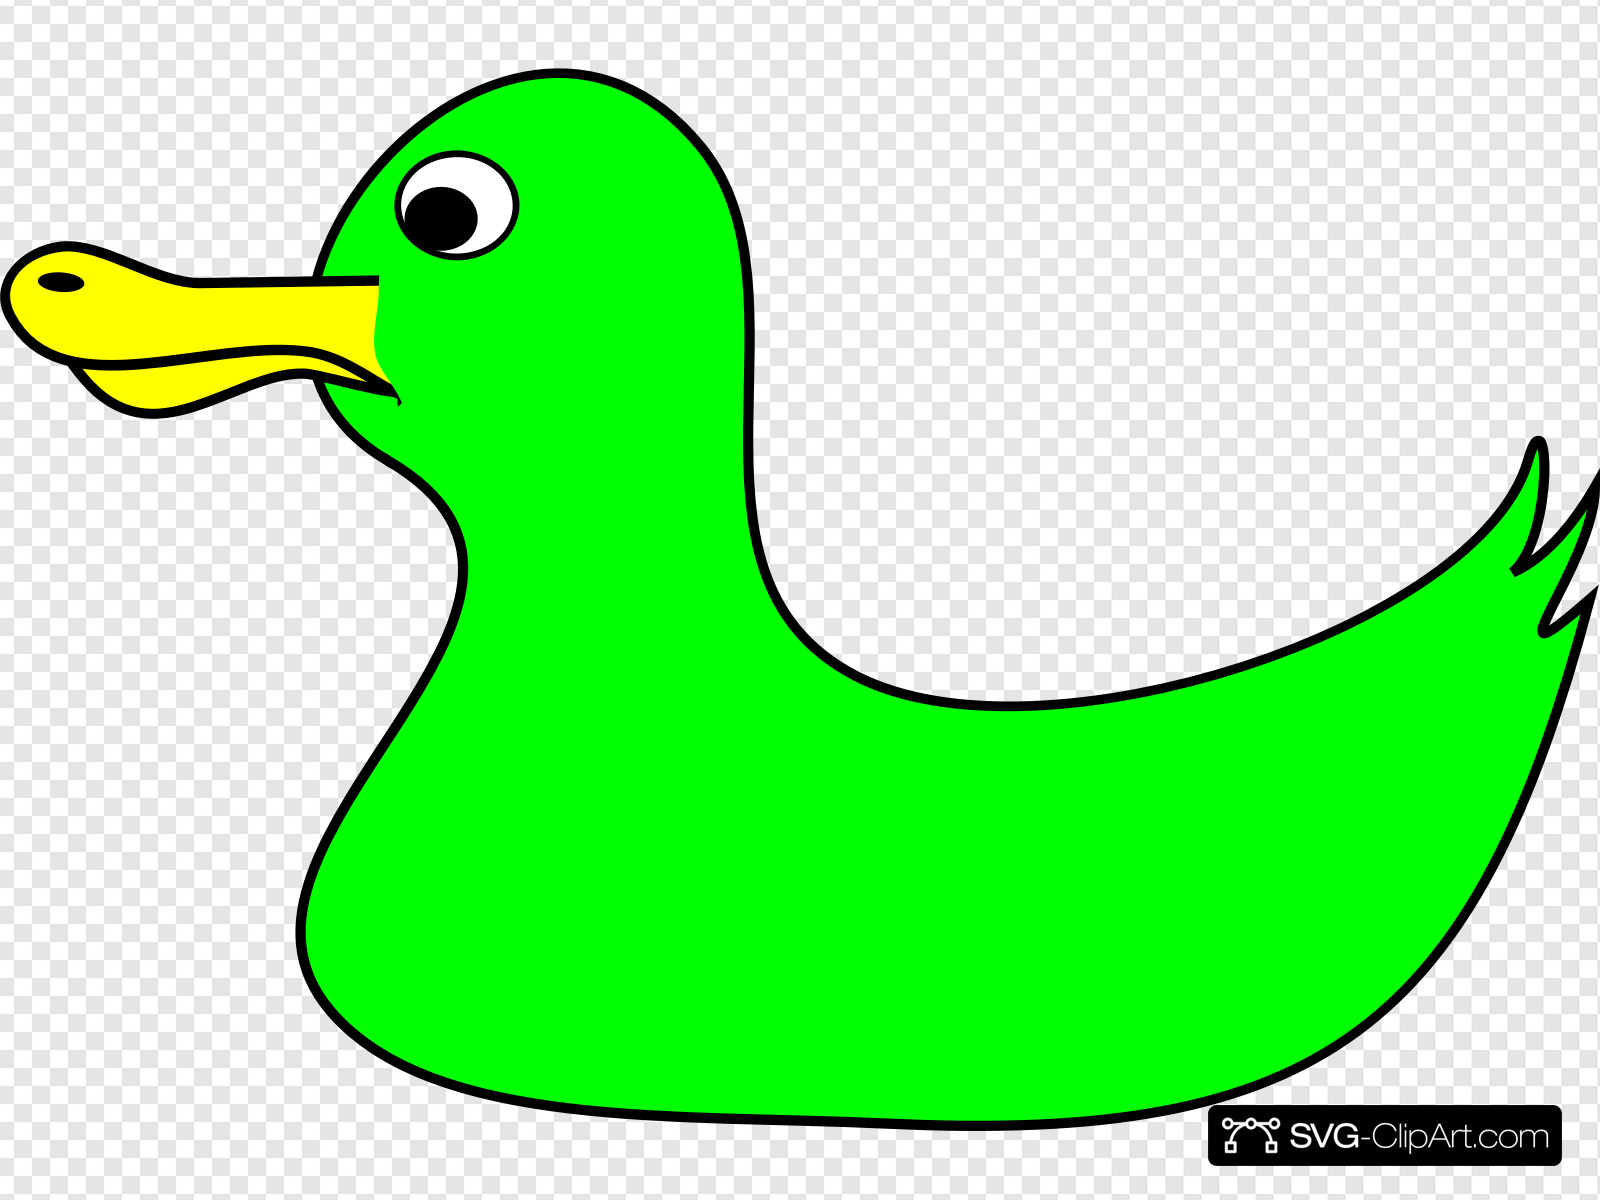 Duck clip art icon. Ducks clipart green